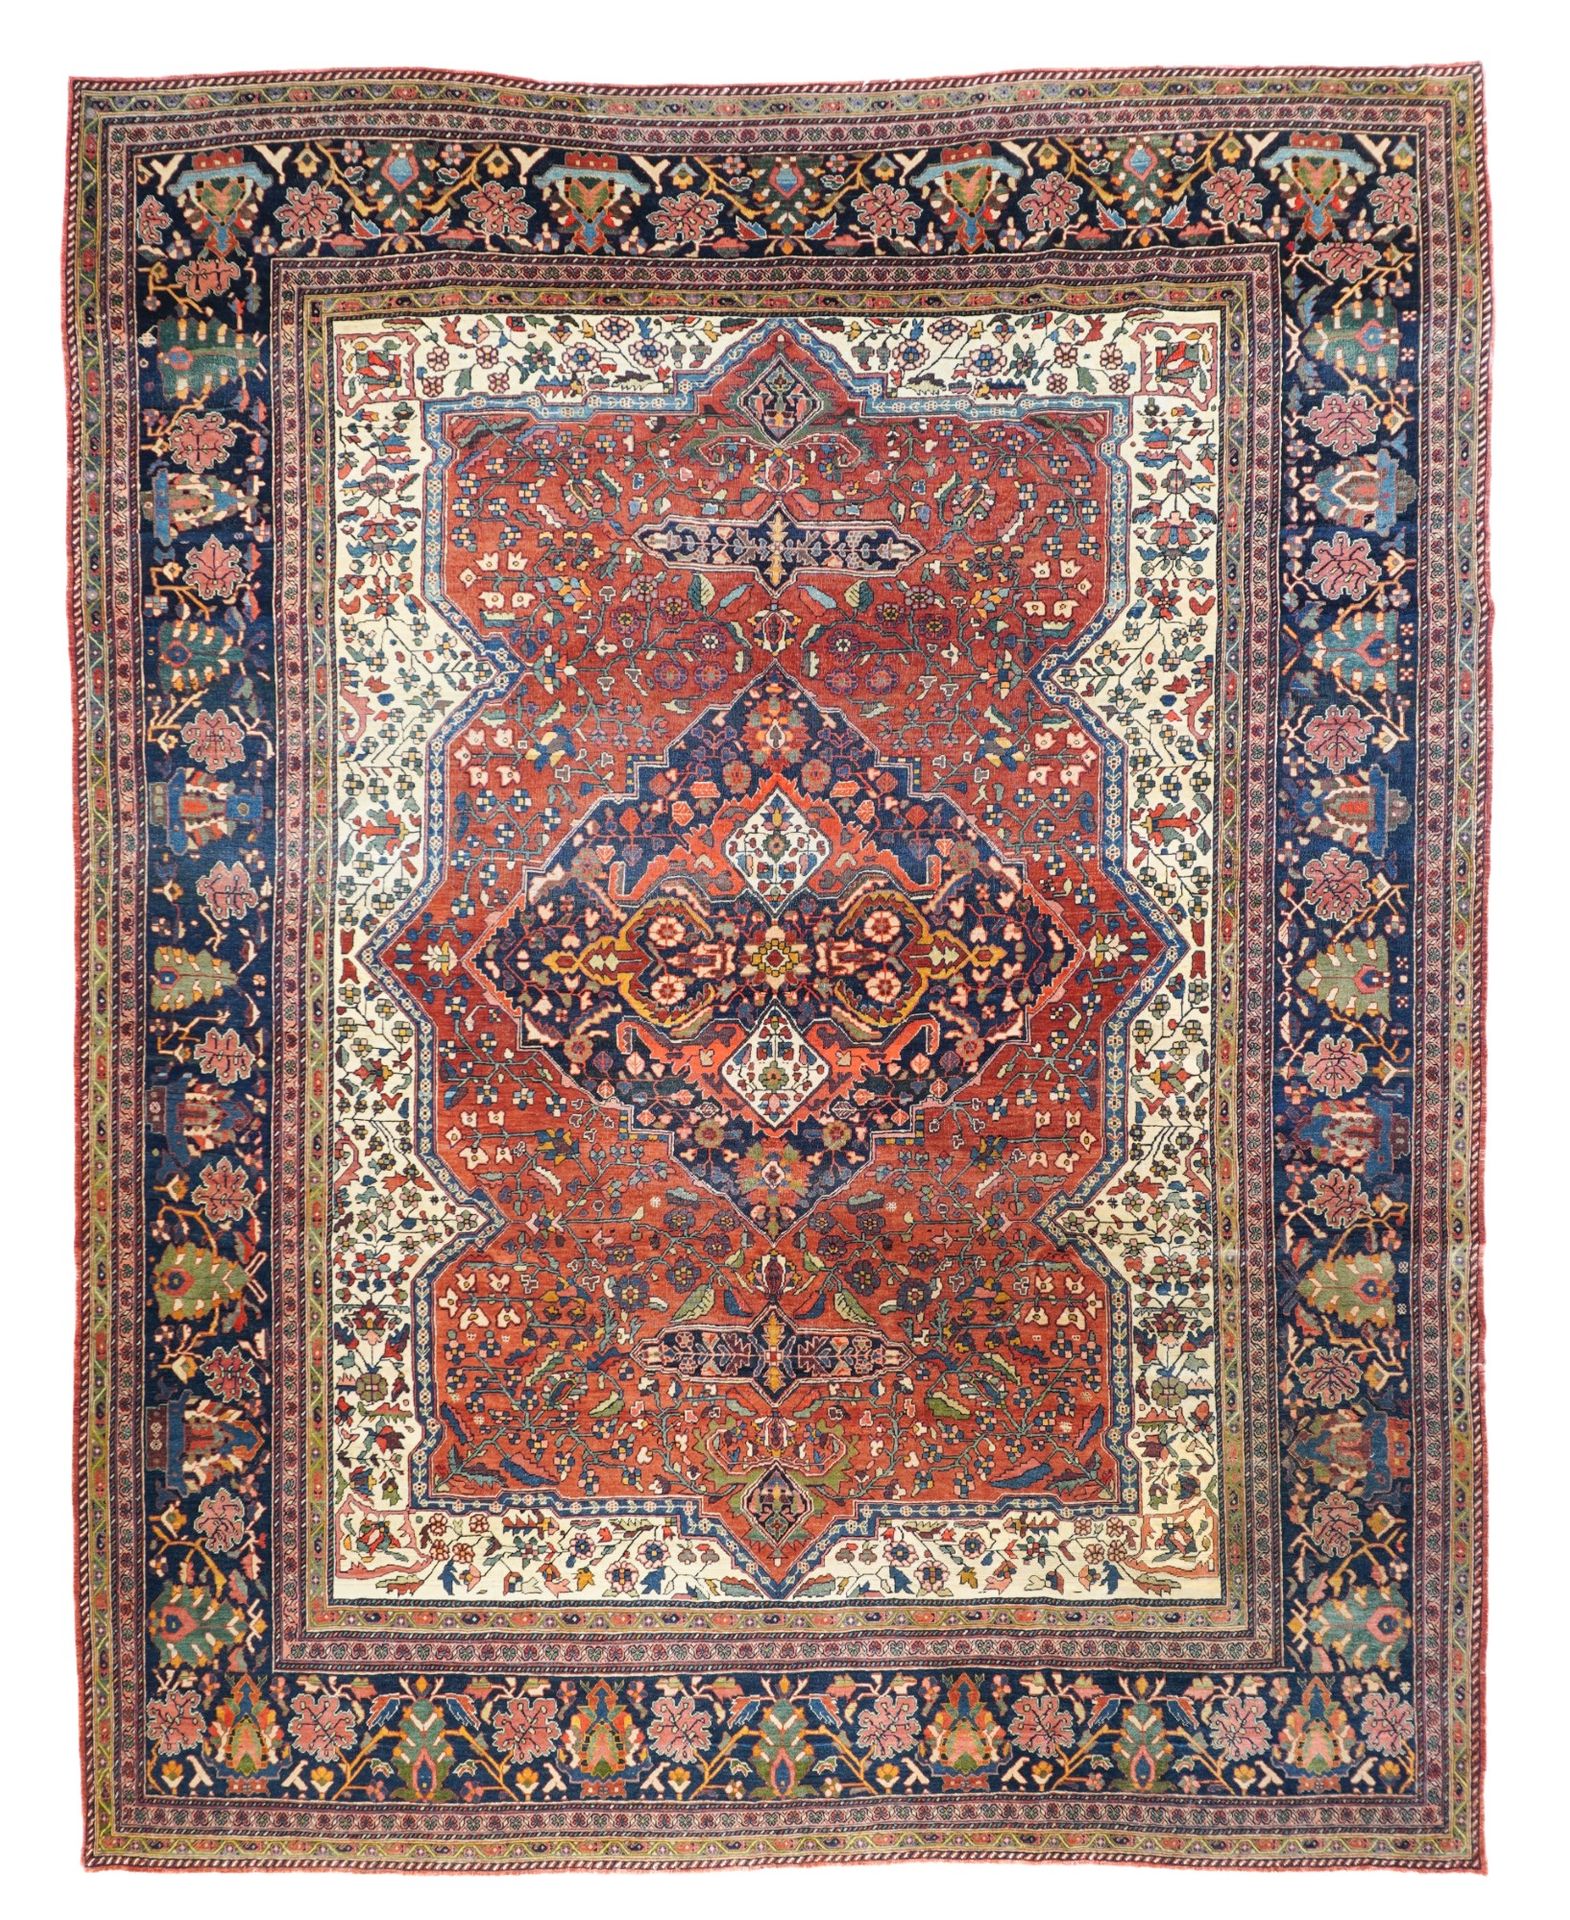 Null Antiker Farahan Sarouk Teppich, 8'11" x 11'4" ( 2.72 x 3.45 M )